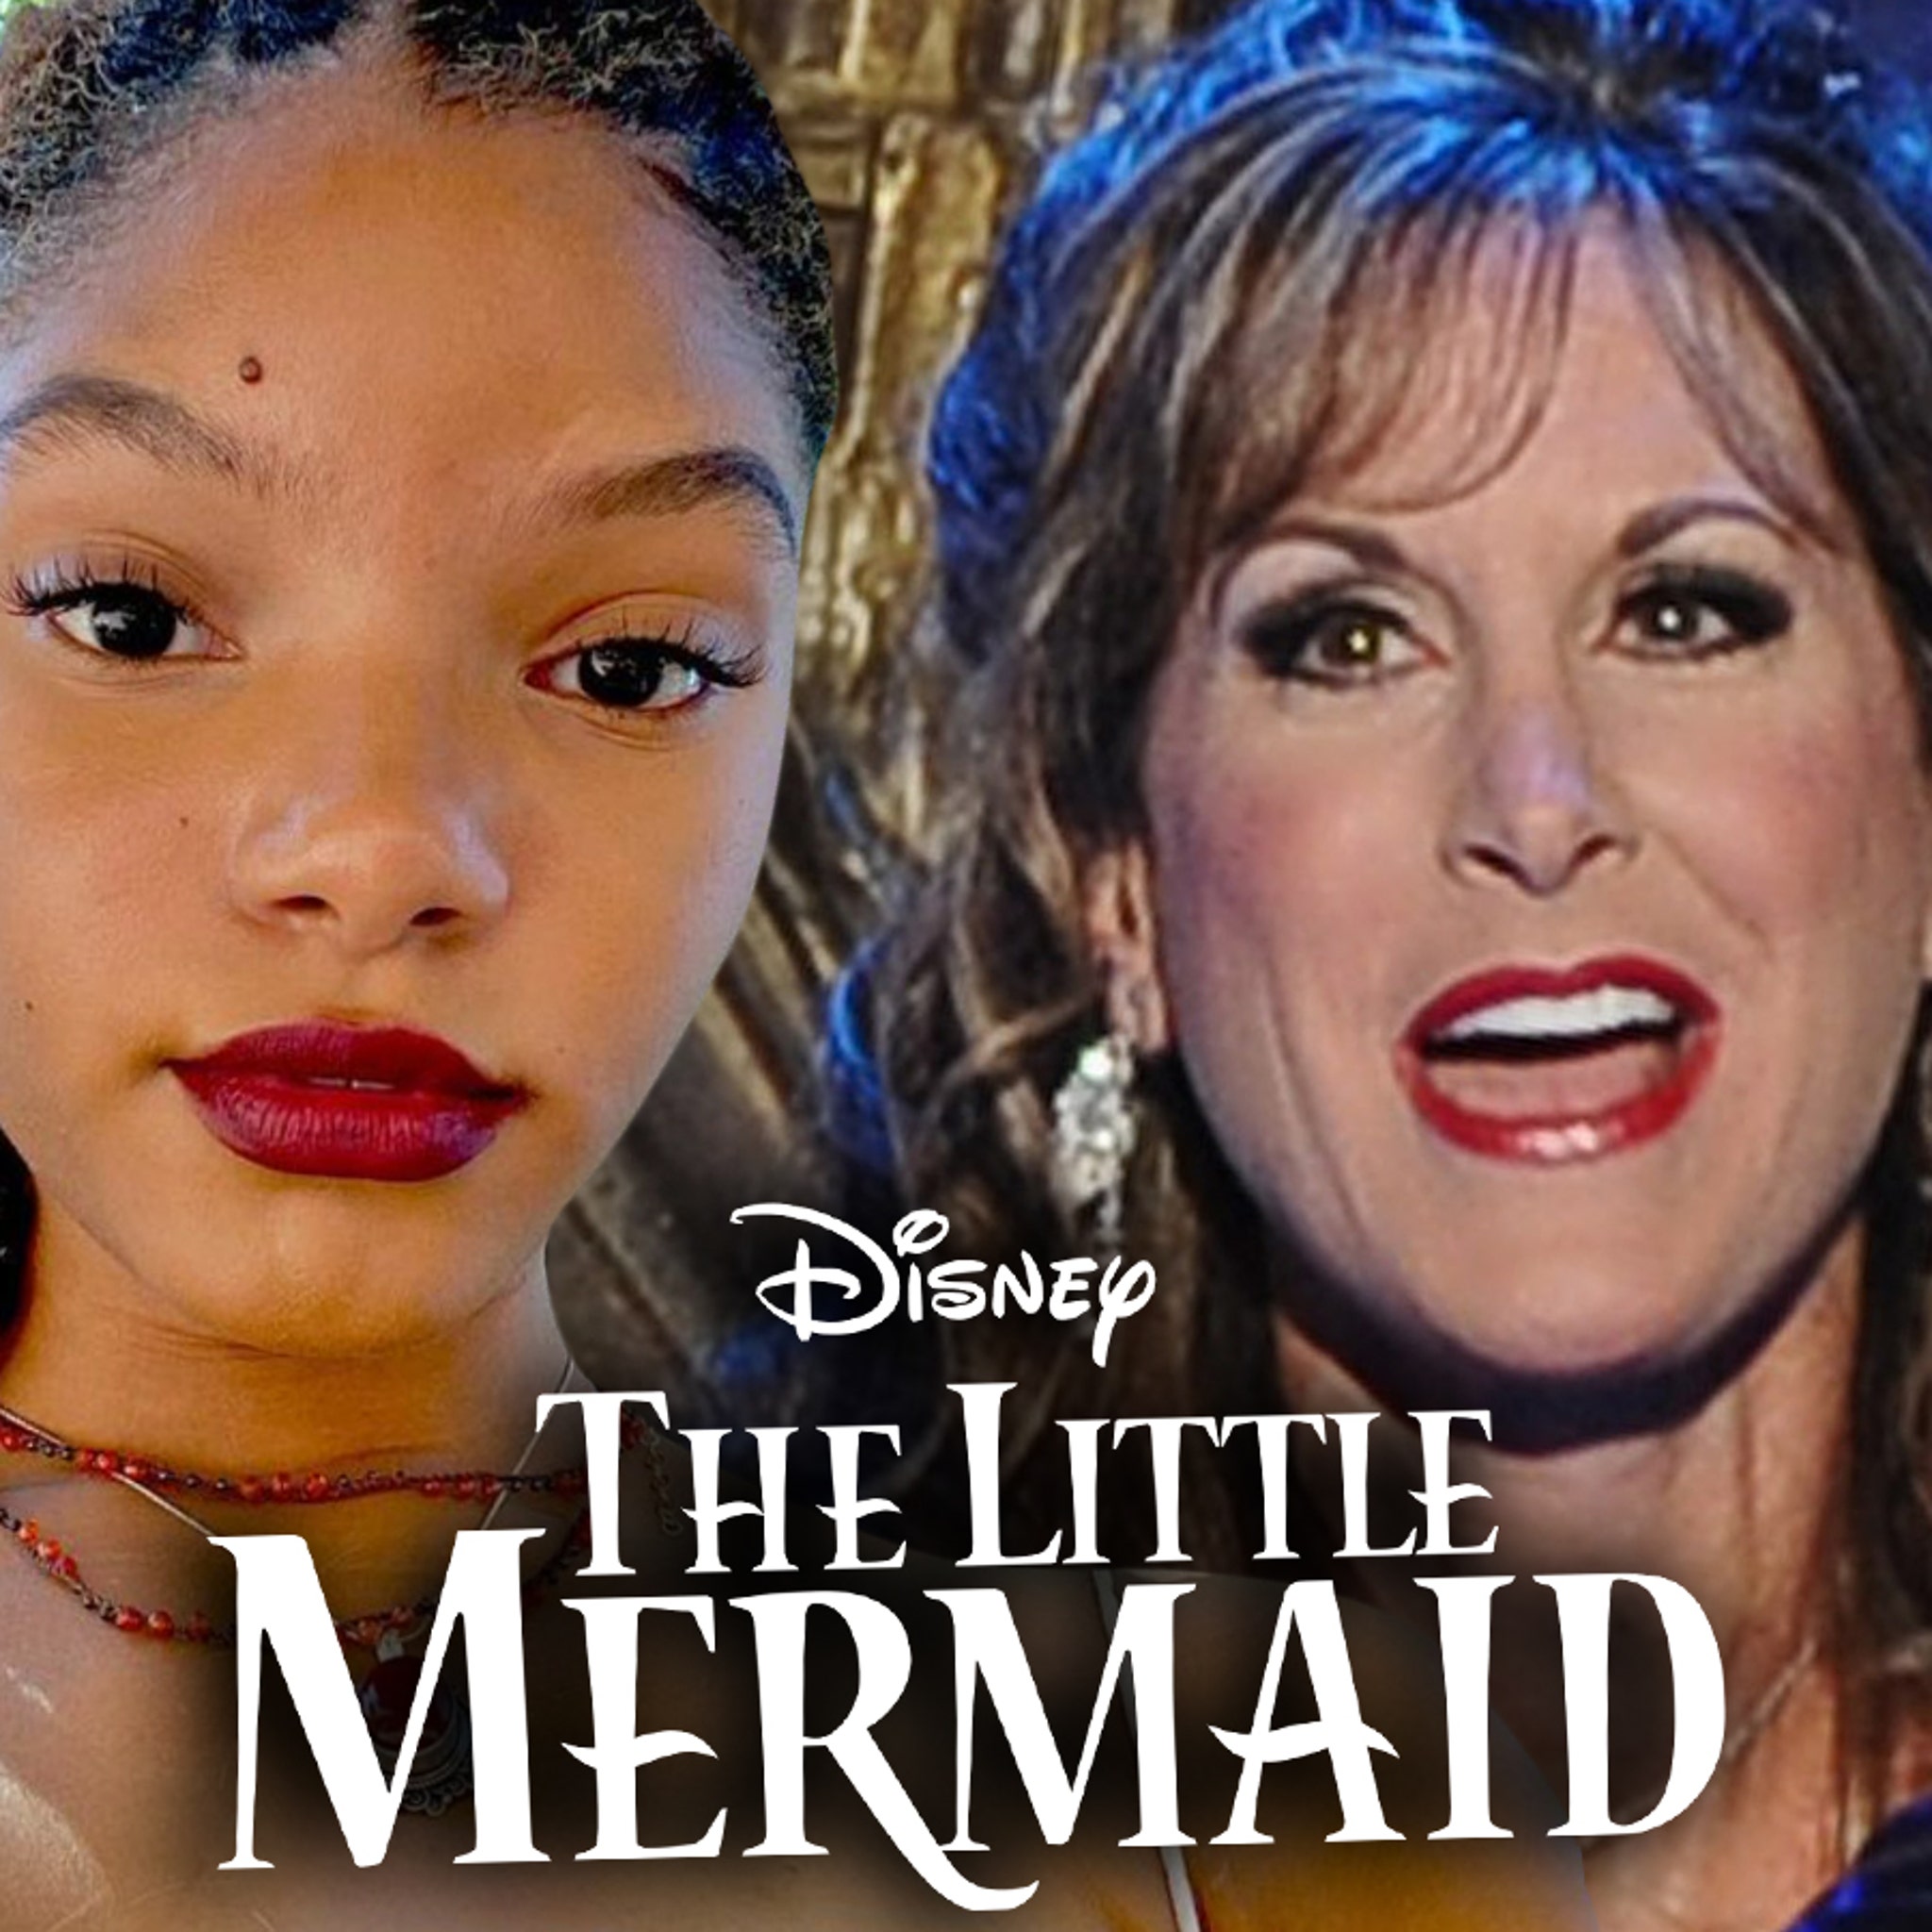 Little Mermaid' trailer: See Halle Bailey as Princess Ariel - Los